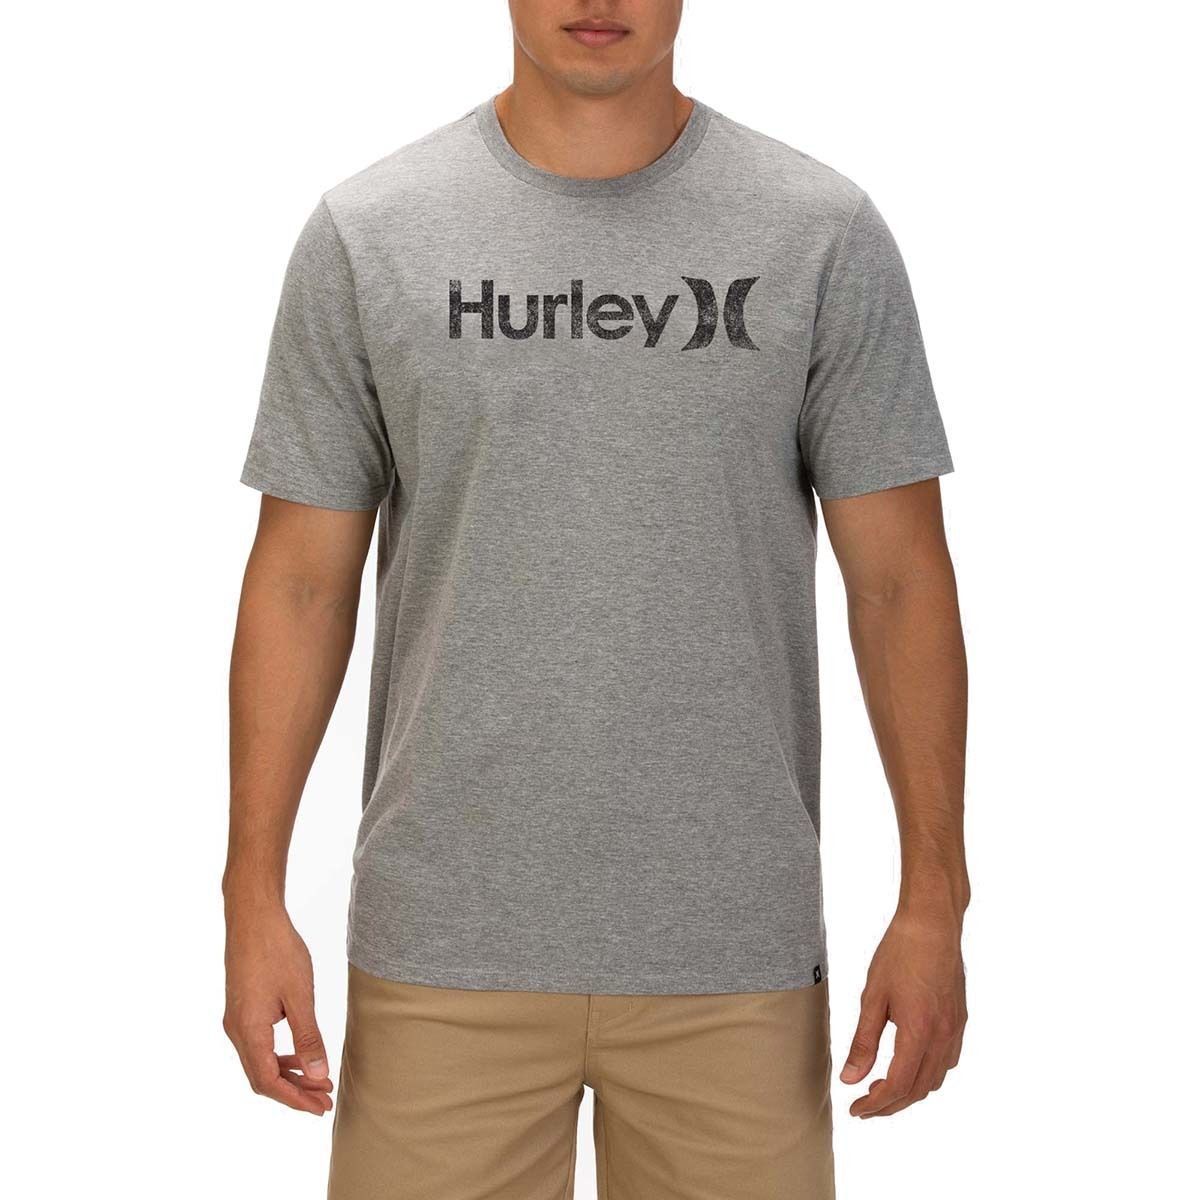 HURLEY ONE & ONLY HYBRID TEE HURLEY